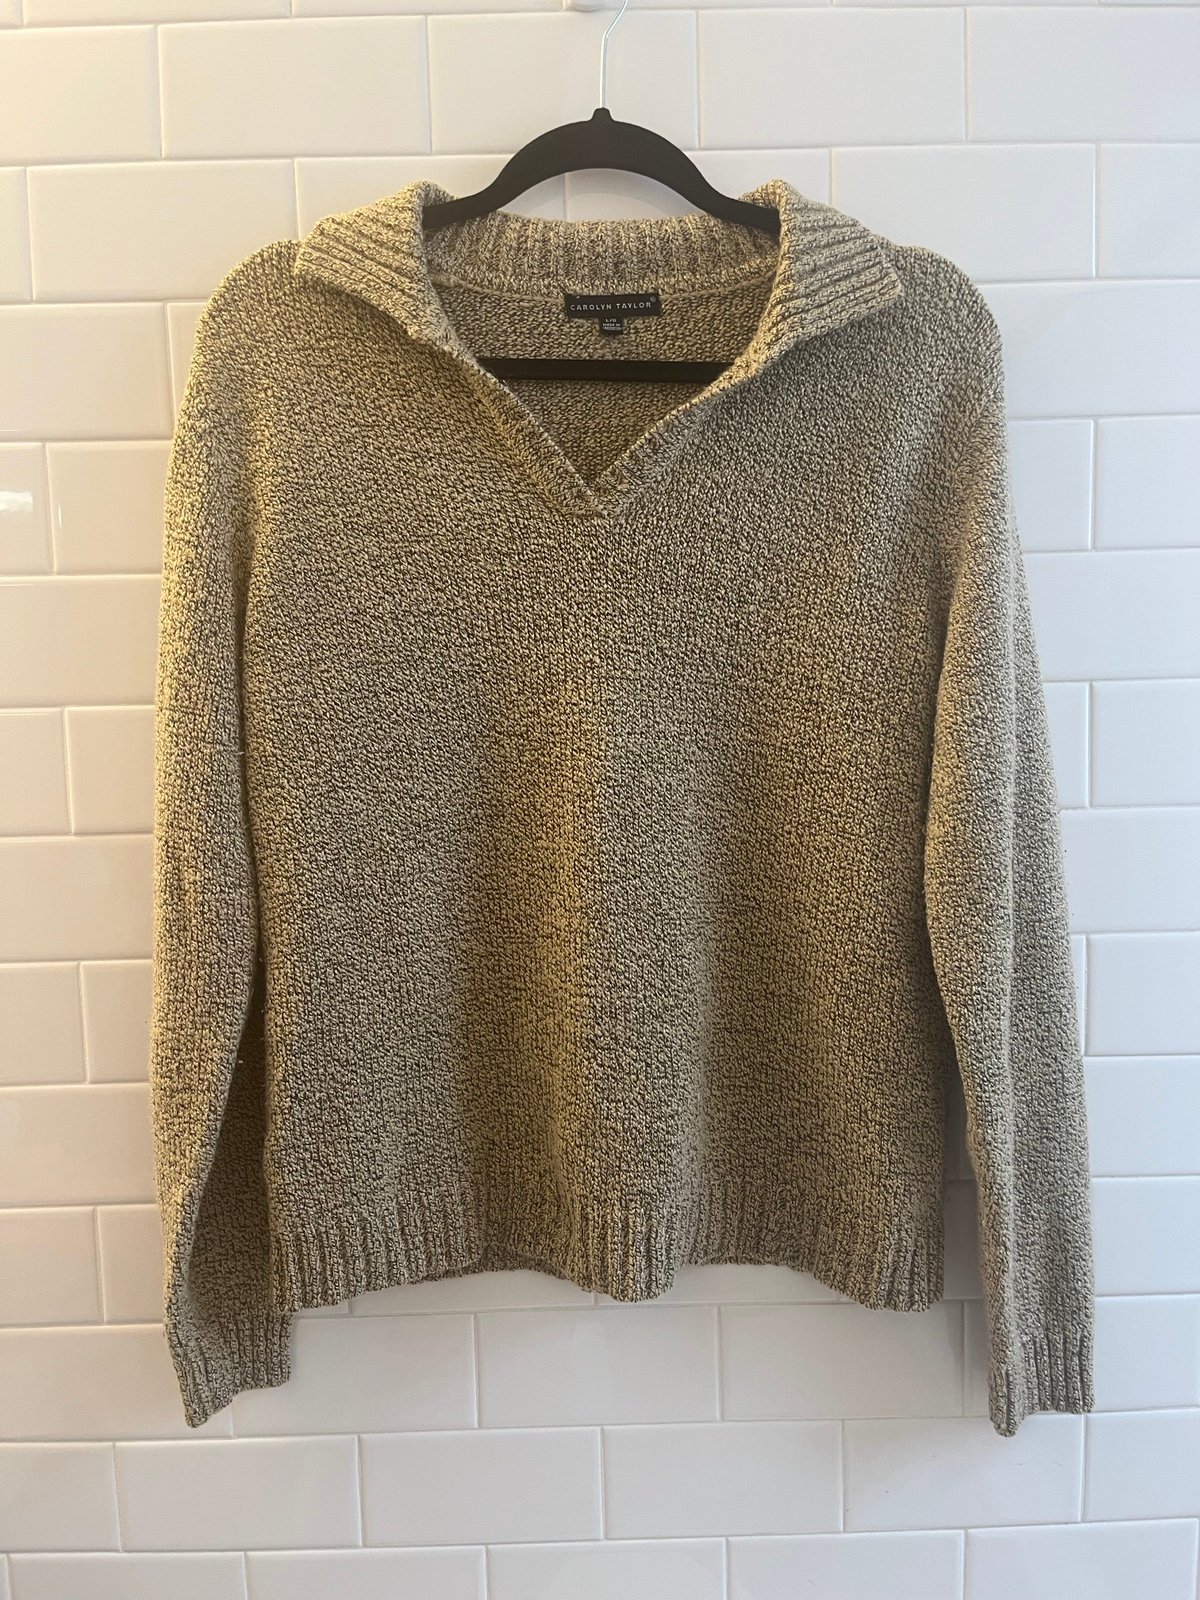 Buy Carolyn Taylor knit long Sleeve Sweatshirt Size Large j03MHTcR0 US Outlet